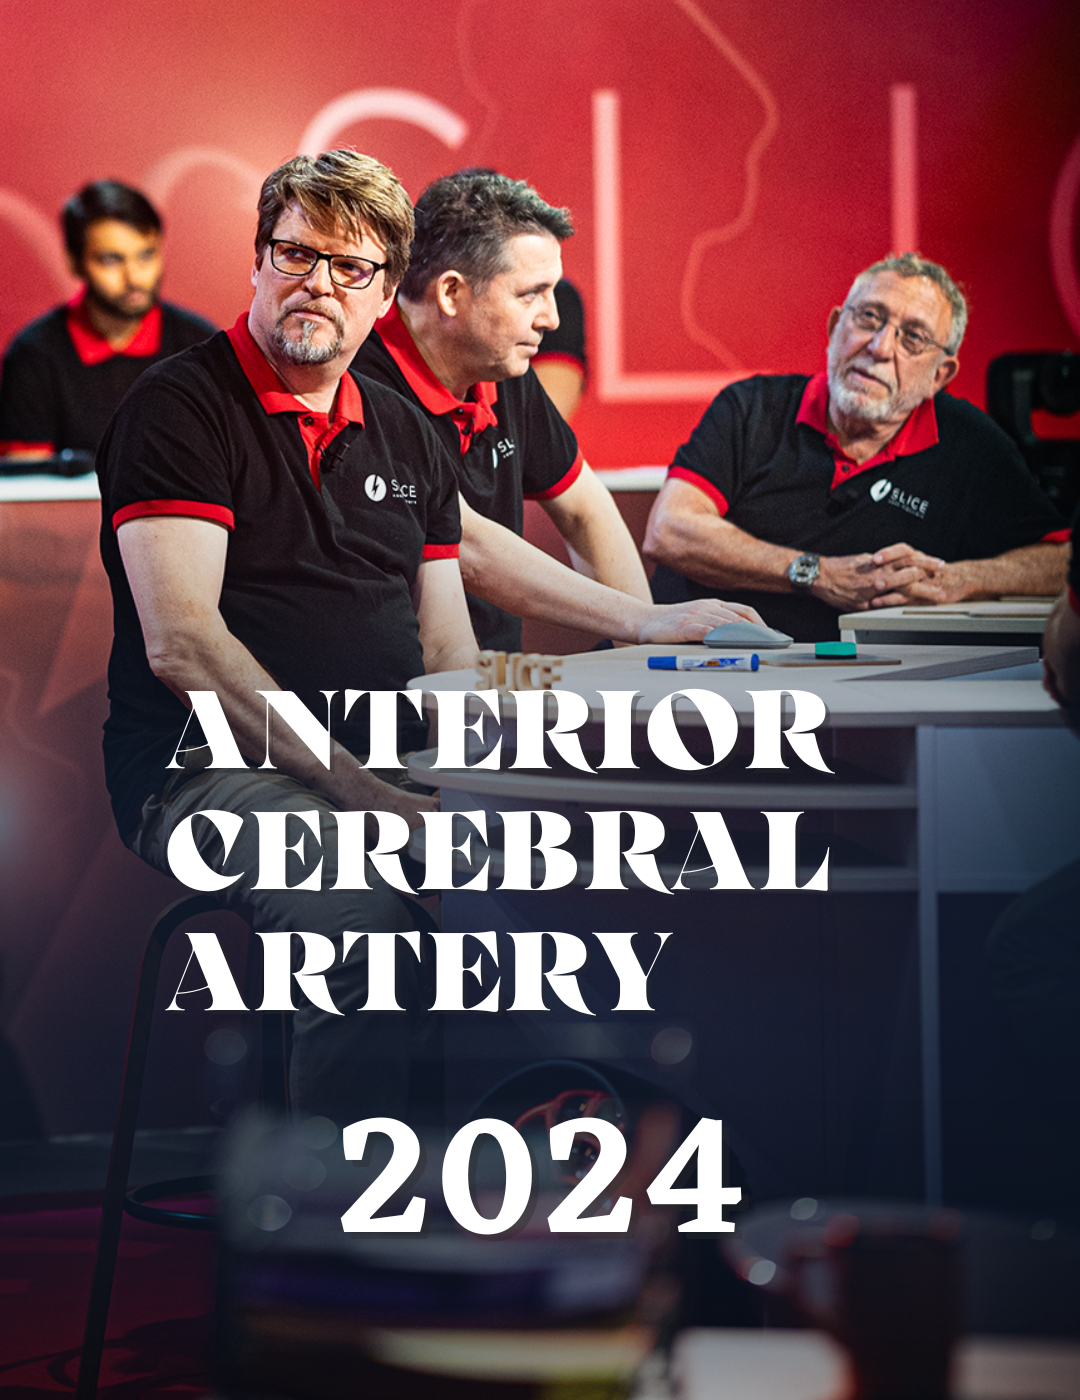 Anterior cerebral artery 2024